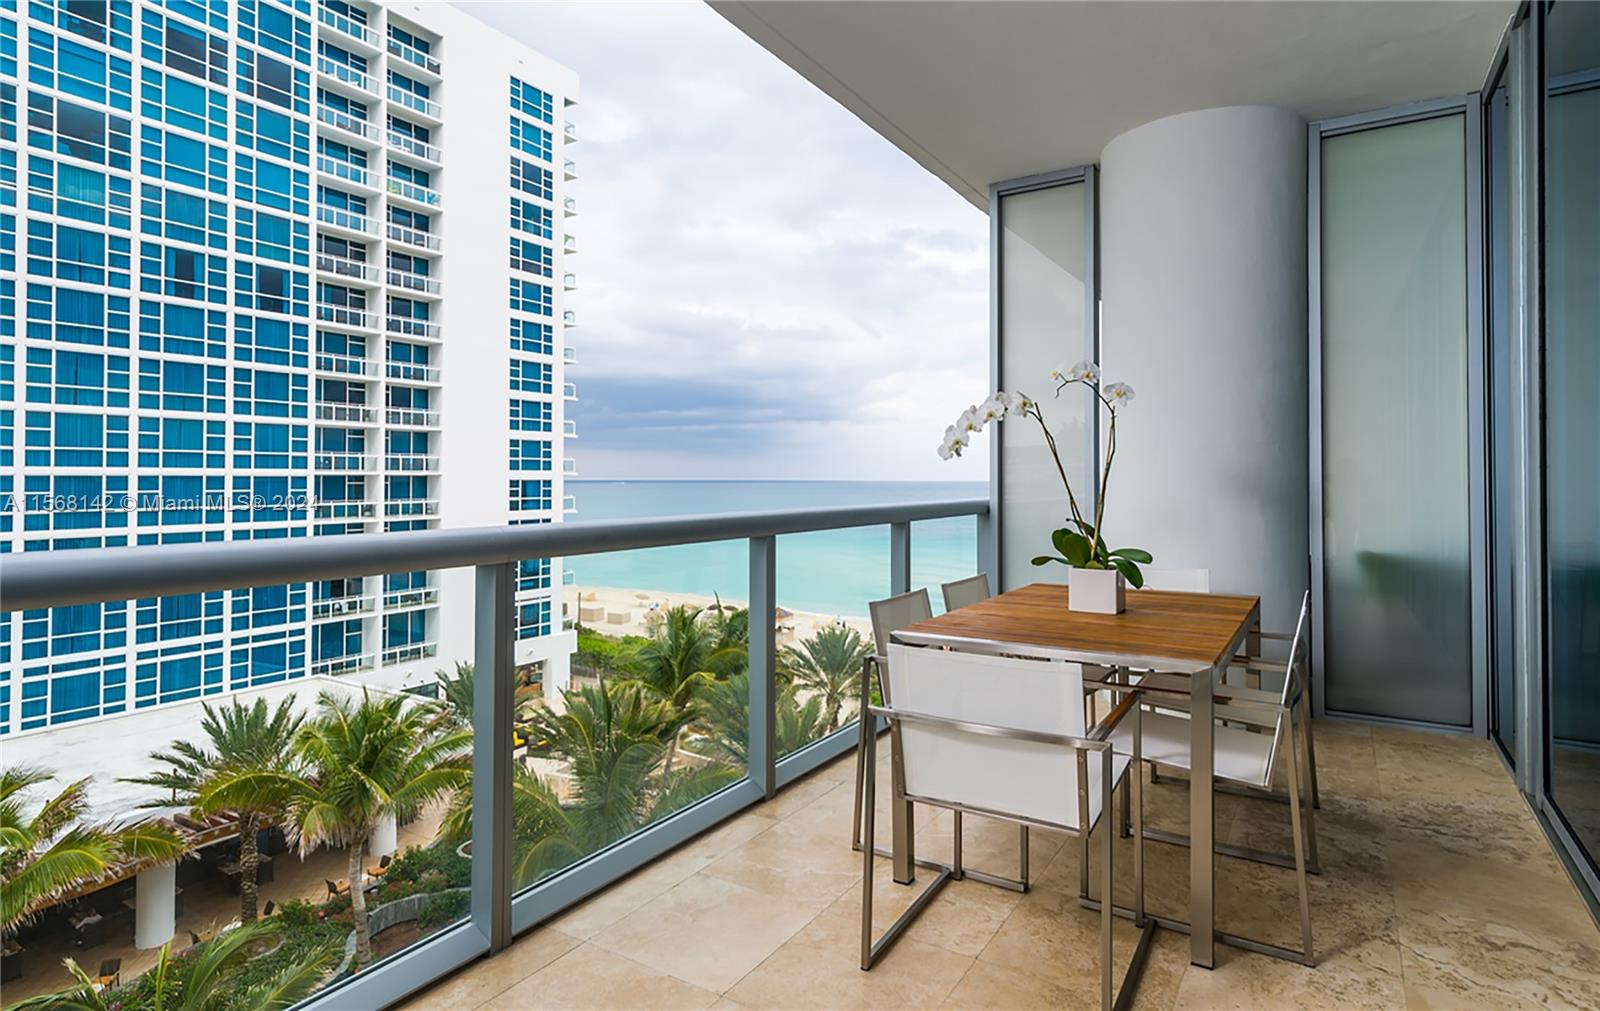 Rental Property at 6799 Collins Ave 503, Miami Beach, Miami-Dade County, Florida - Bedrooms: 2 
Bathrooms: 3  - $6,800 MO.